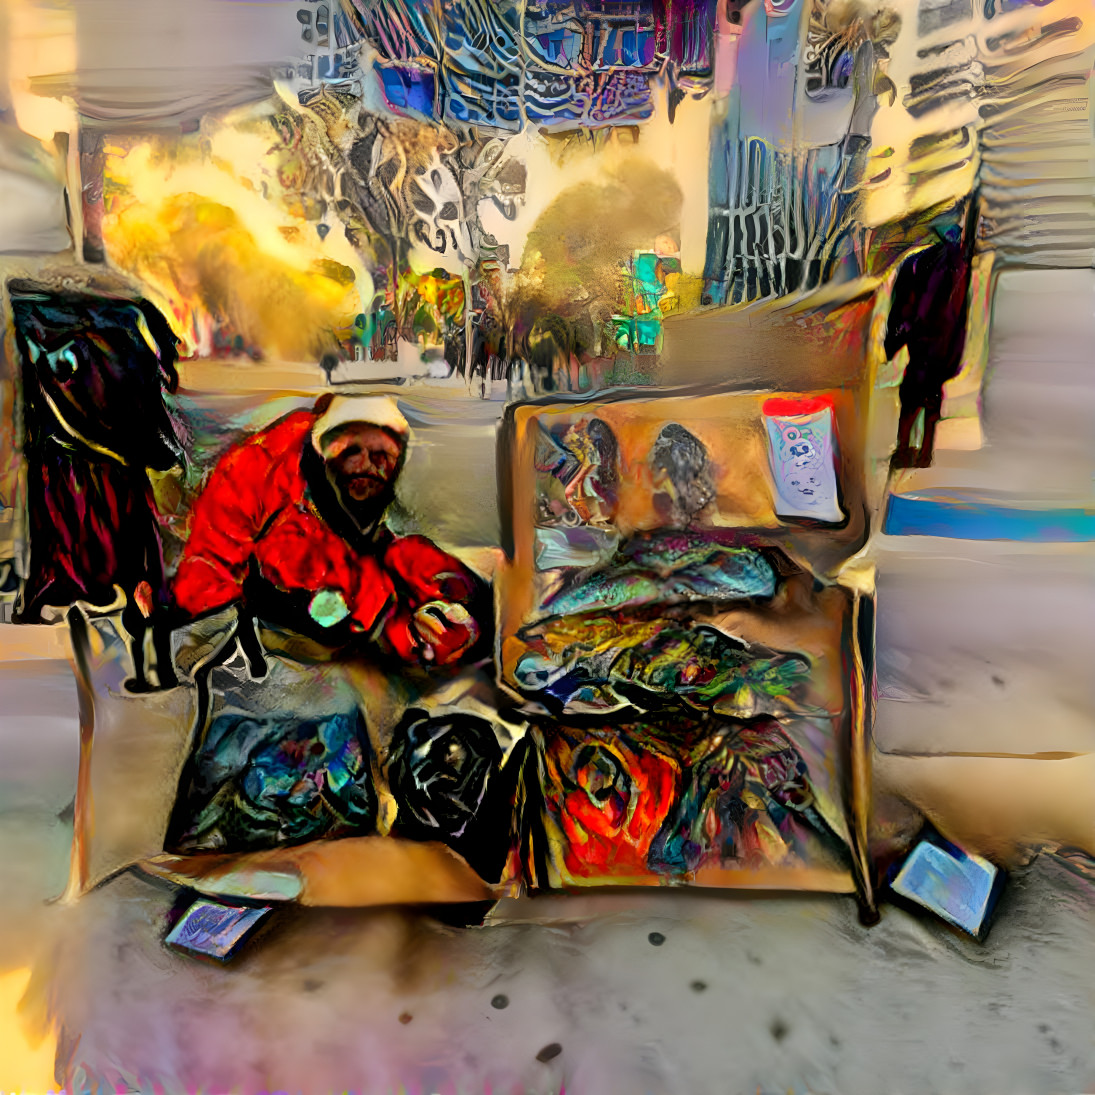 Homeless man sells art